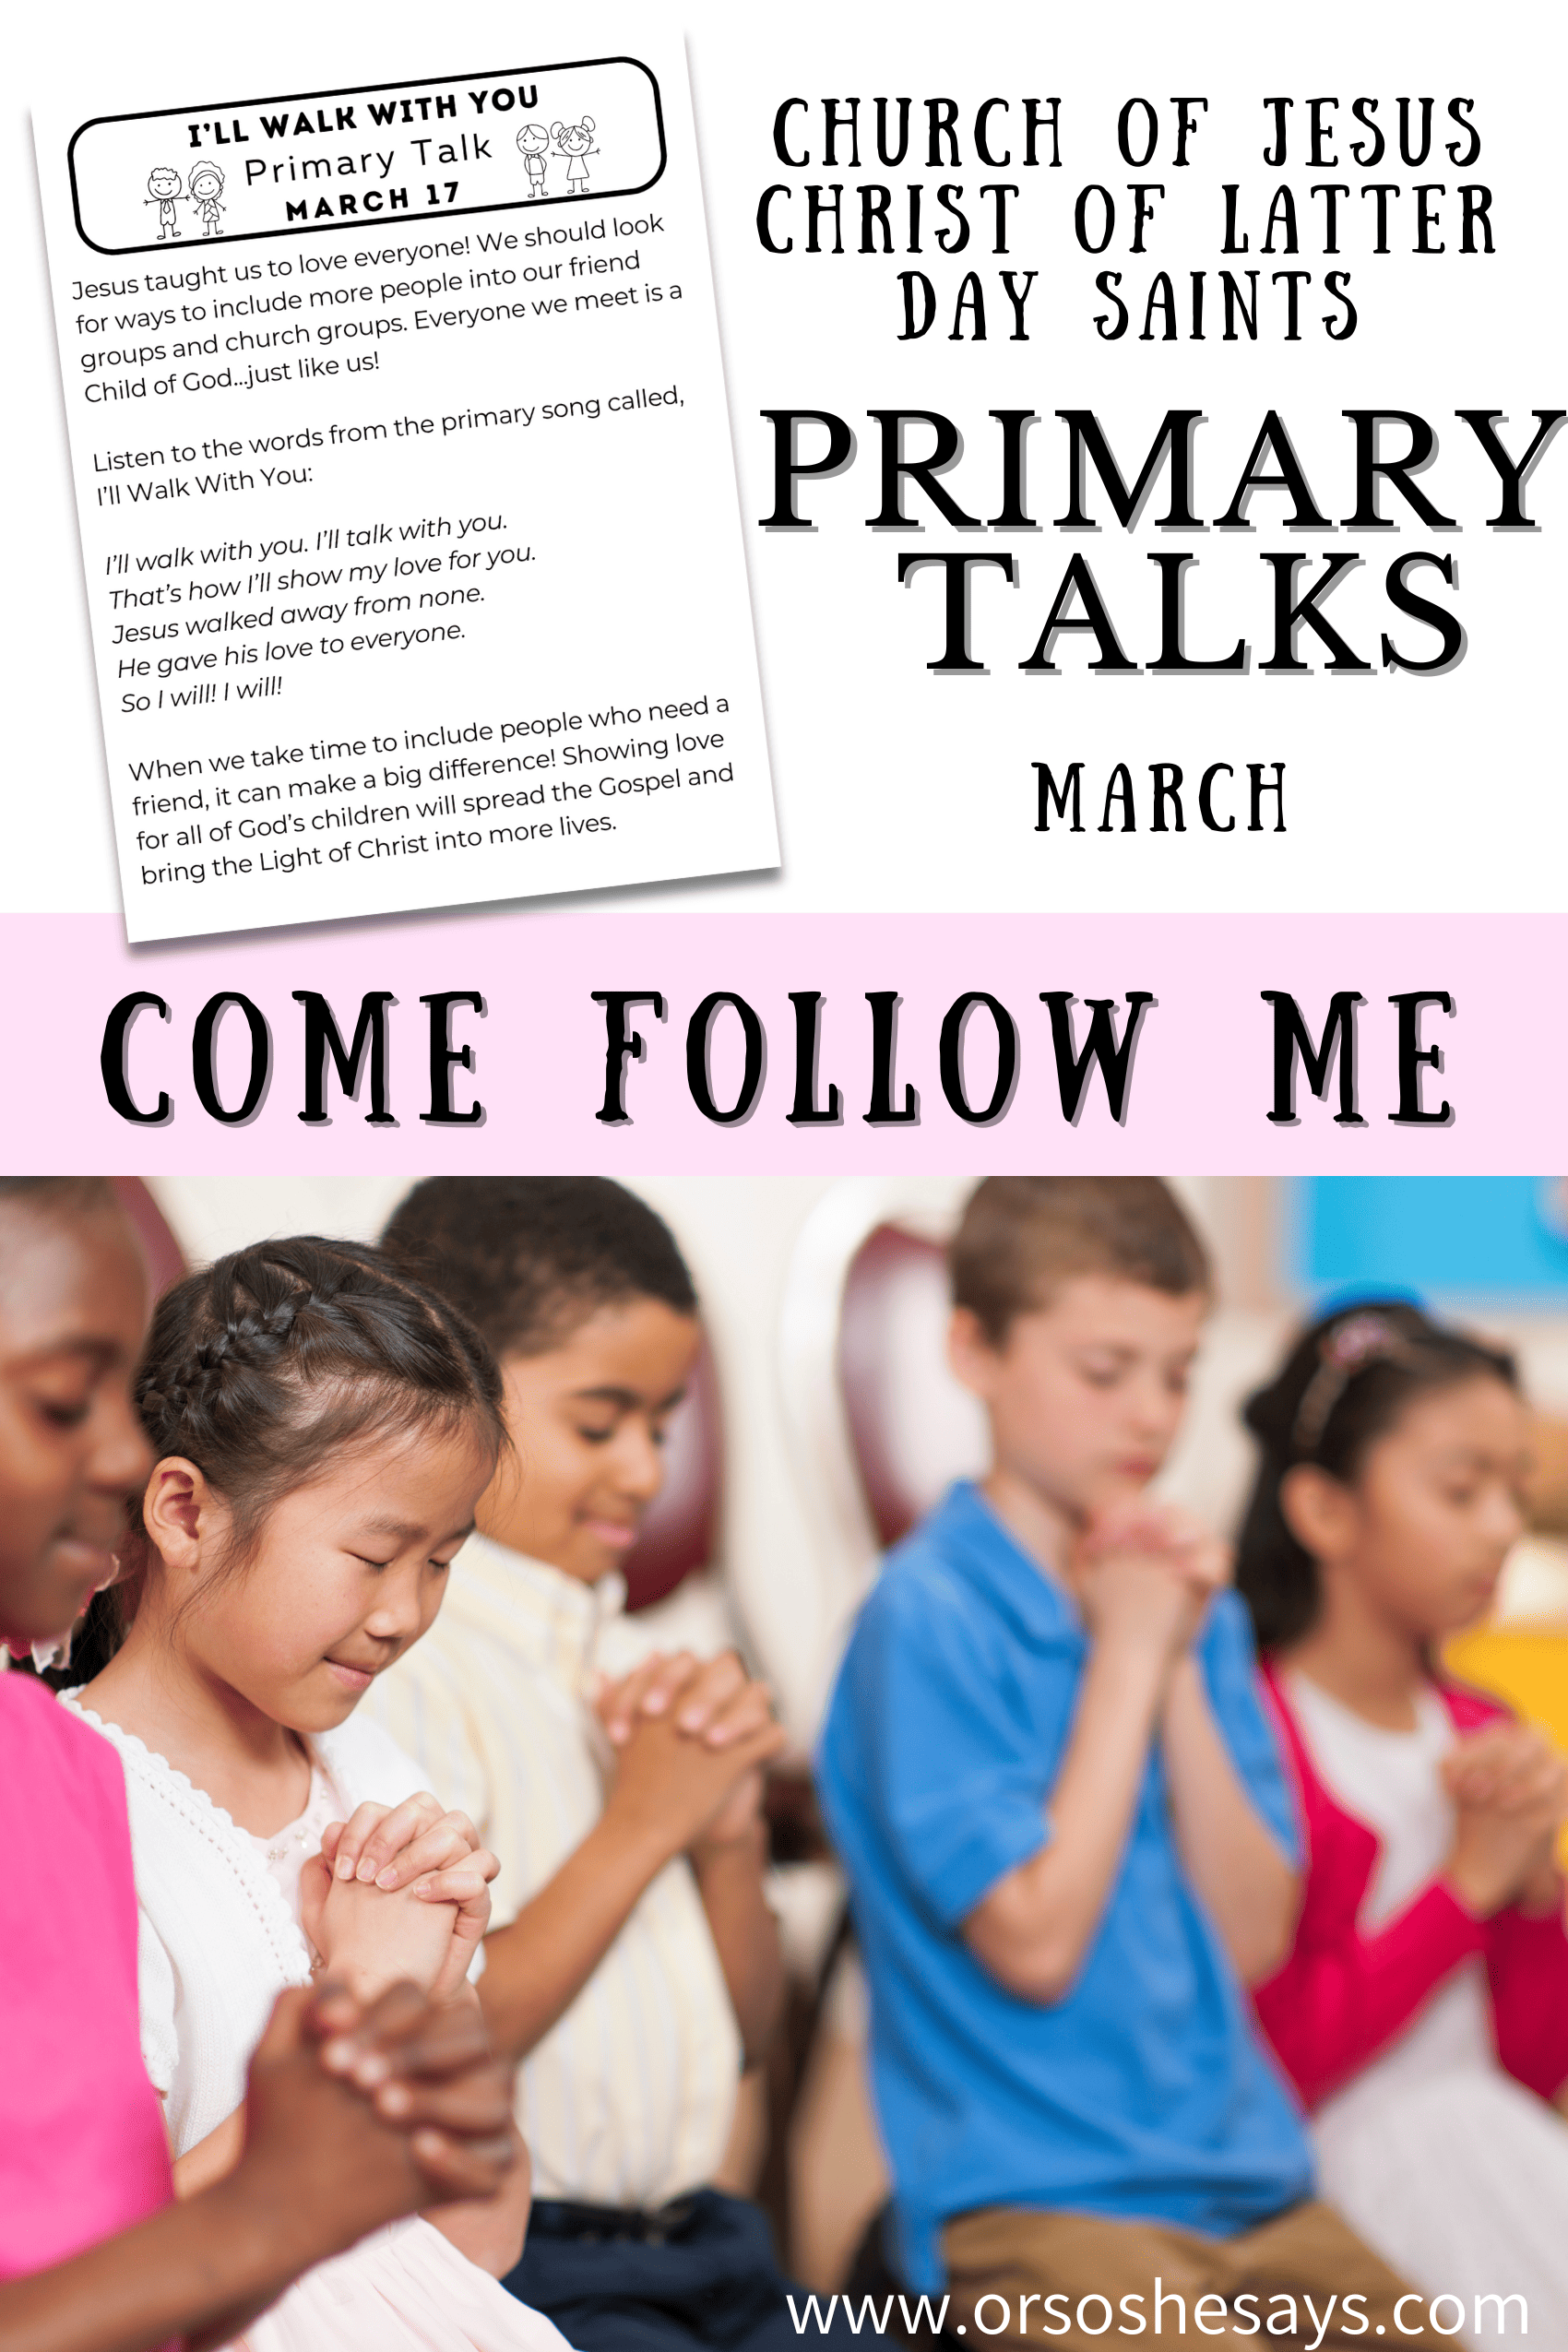 Primary talks